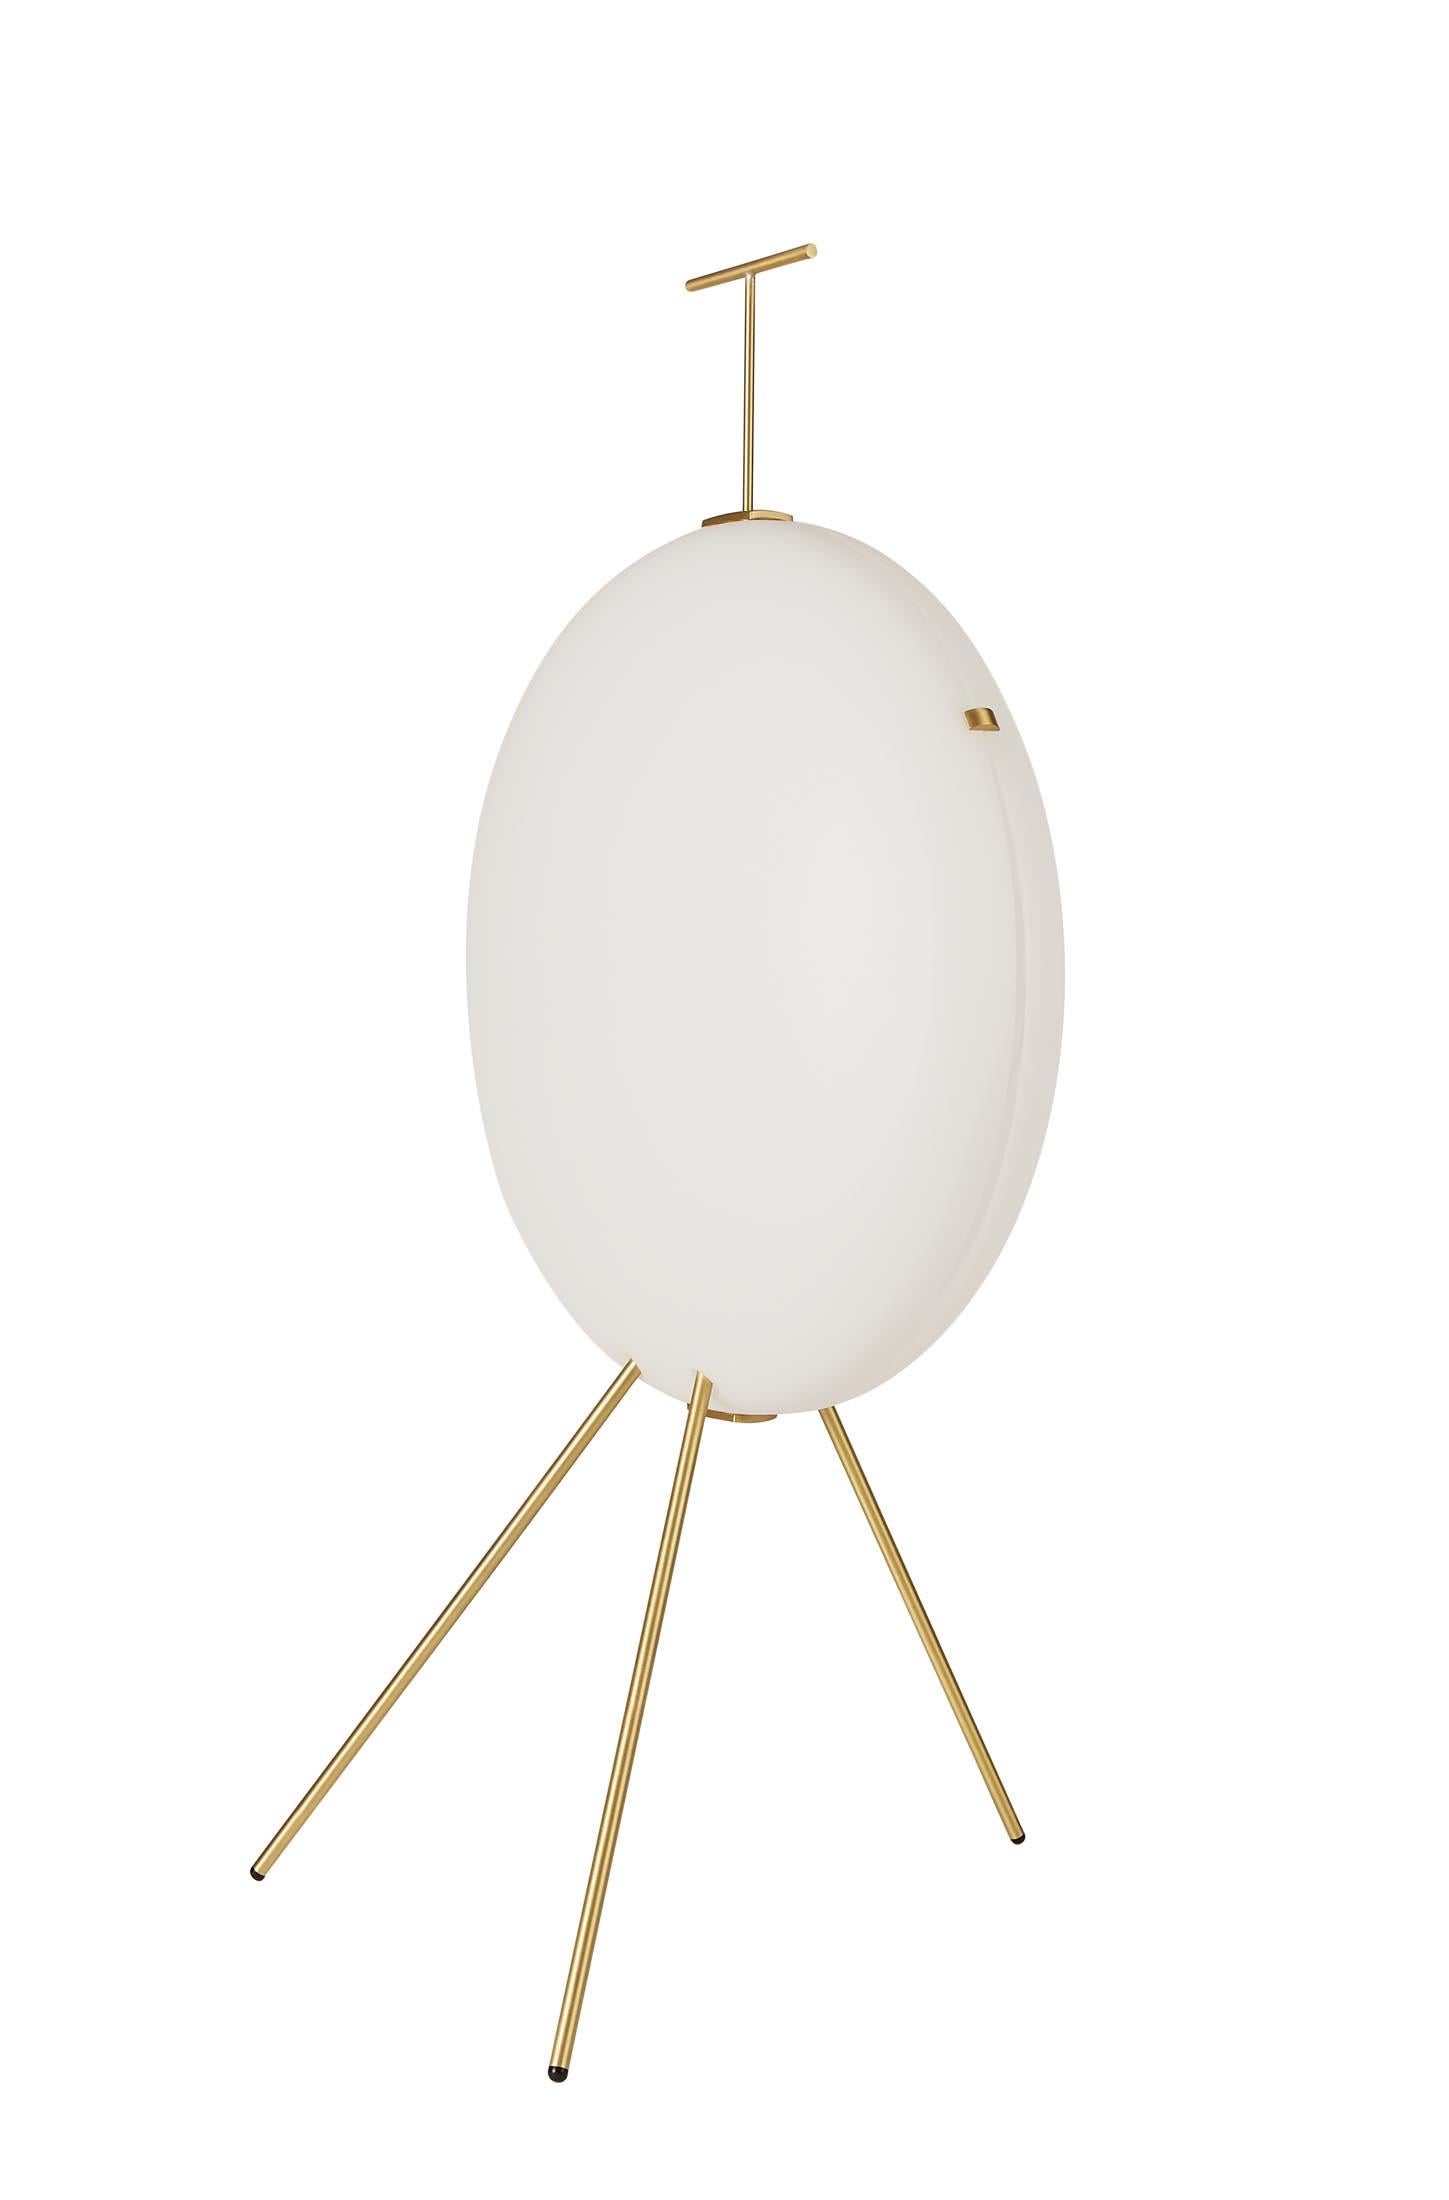 Brushed Gio Ponti Luna Verticale Floor Lamp in Nickel for Tato Italia For Sale